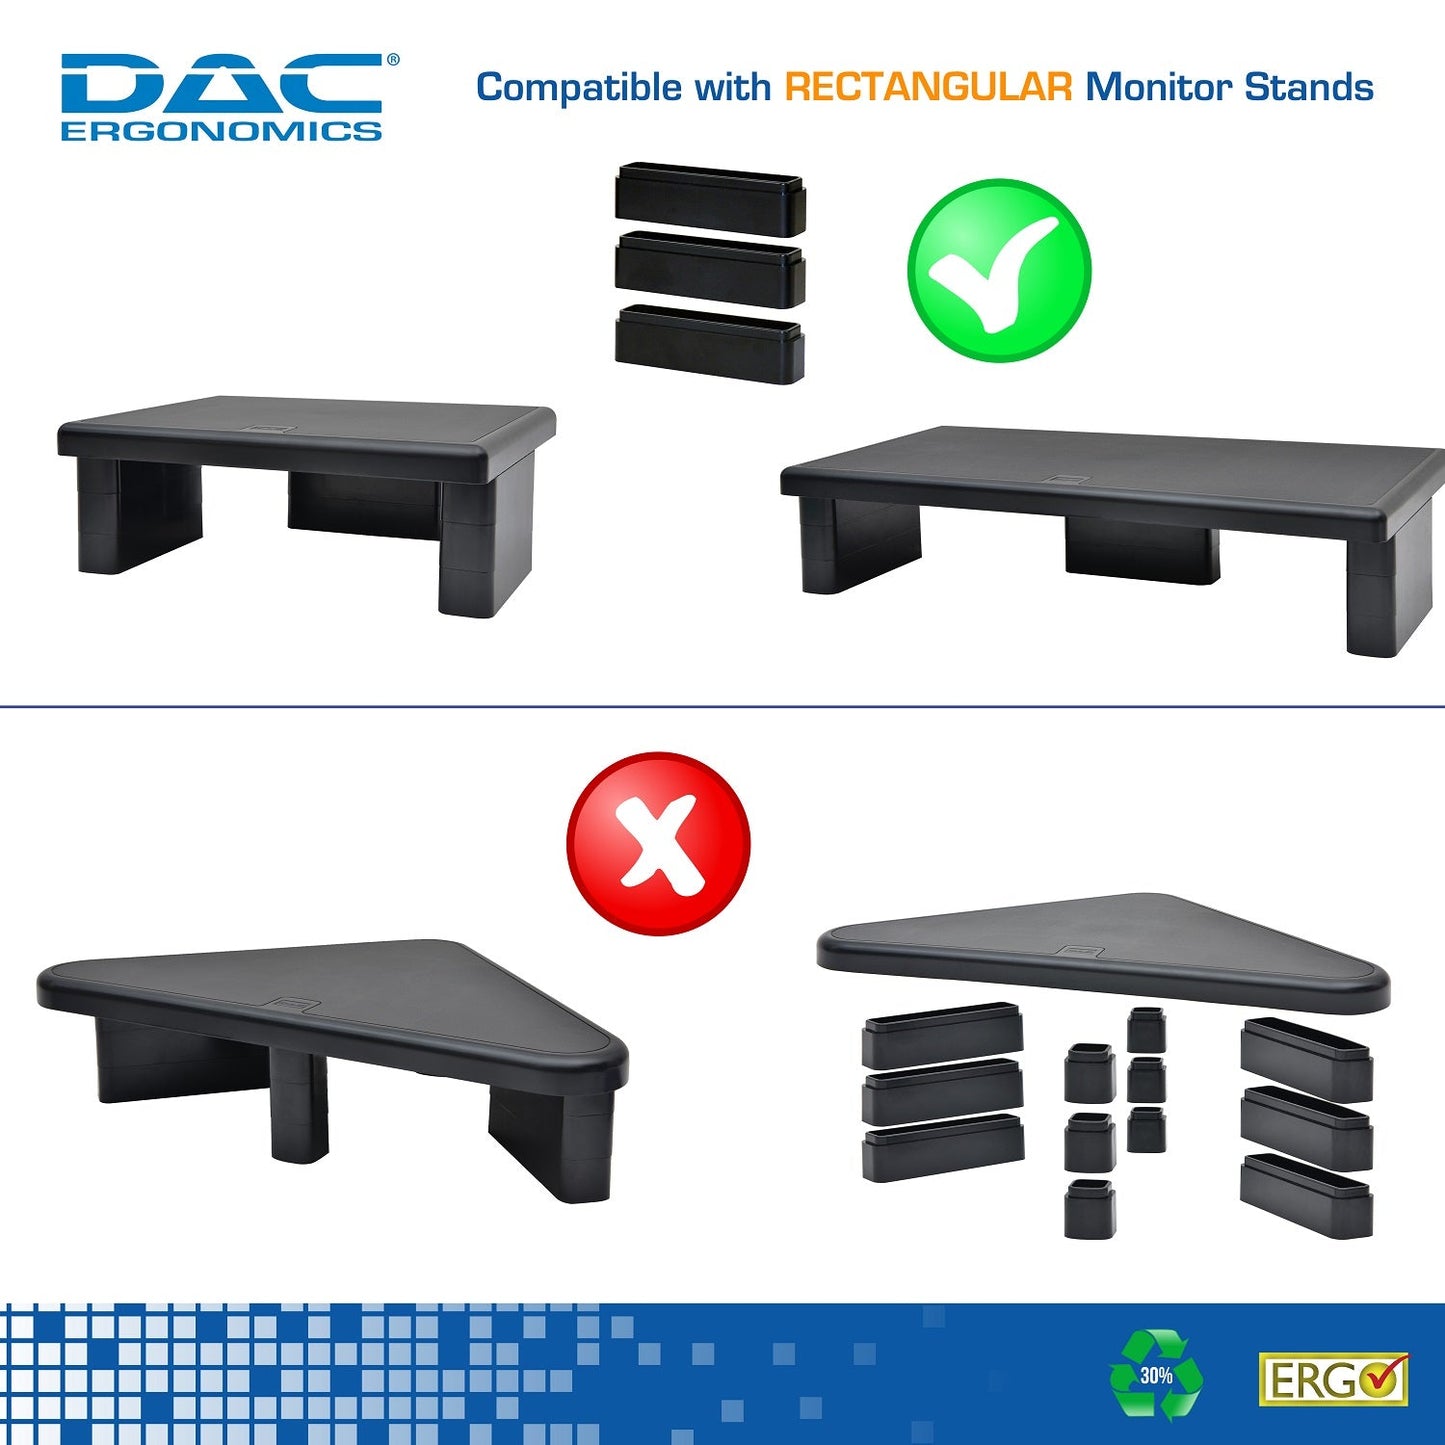 DAC® Stax MP-216 Ergonomic Height-Adjustable Monitor/Laptop Riser Blocks Kit, Black